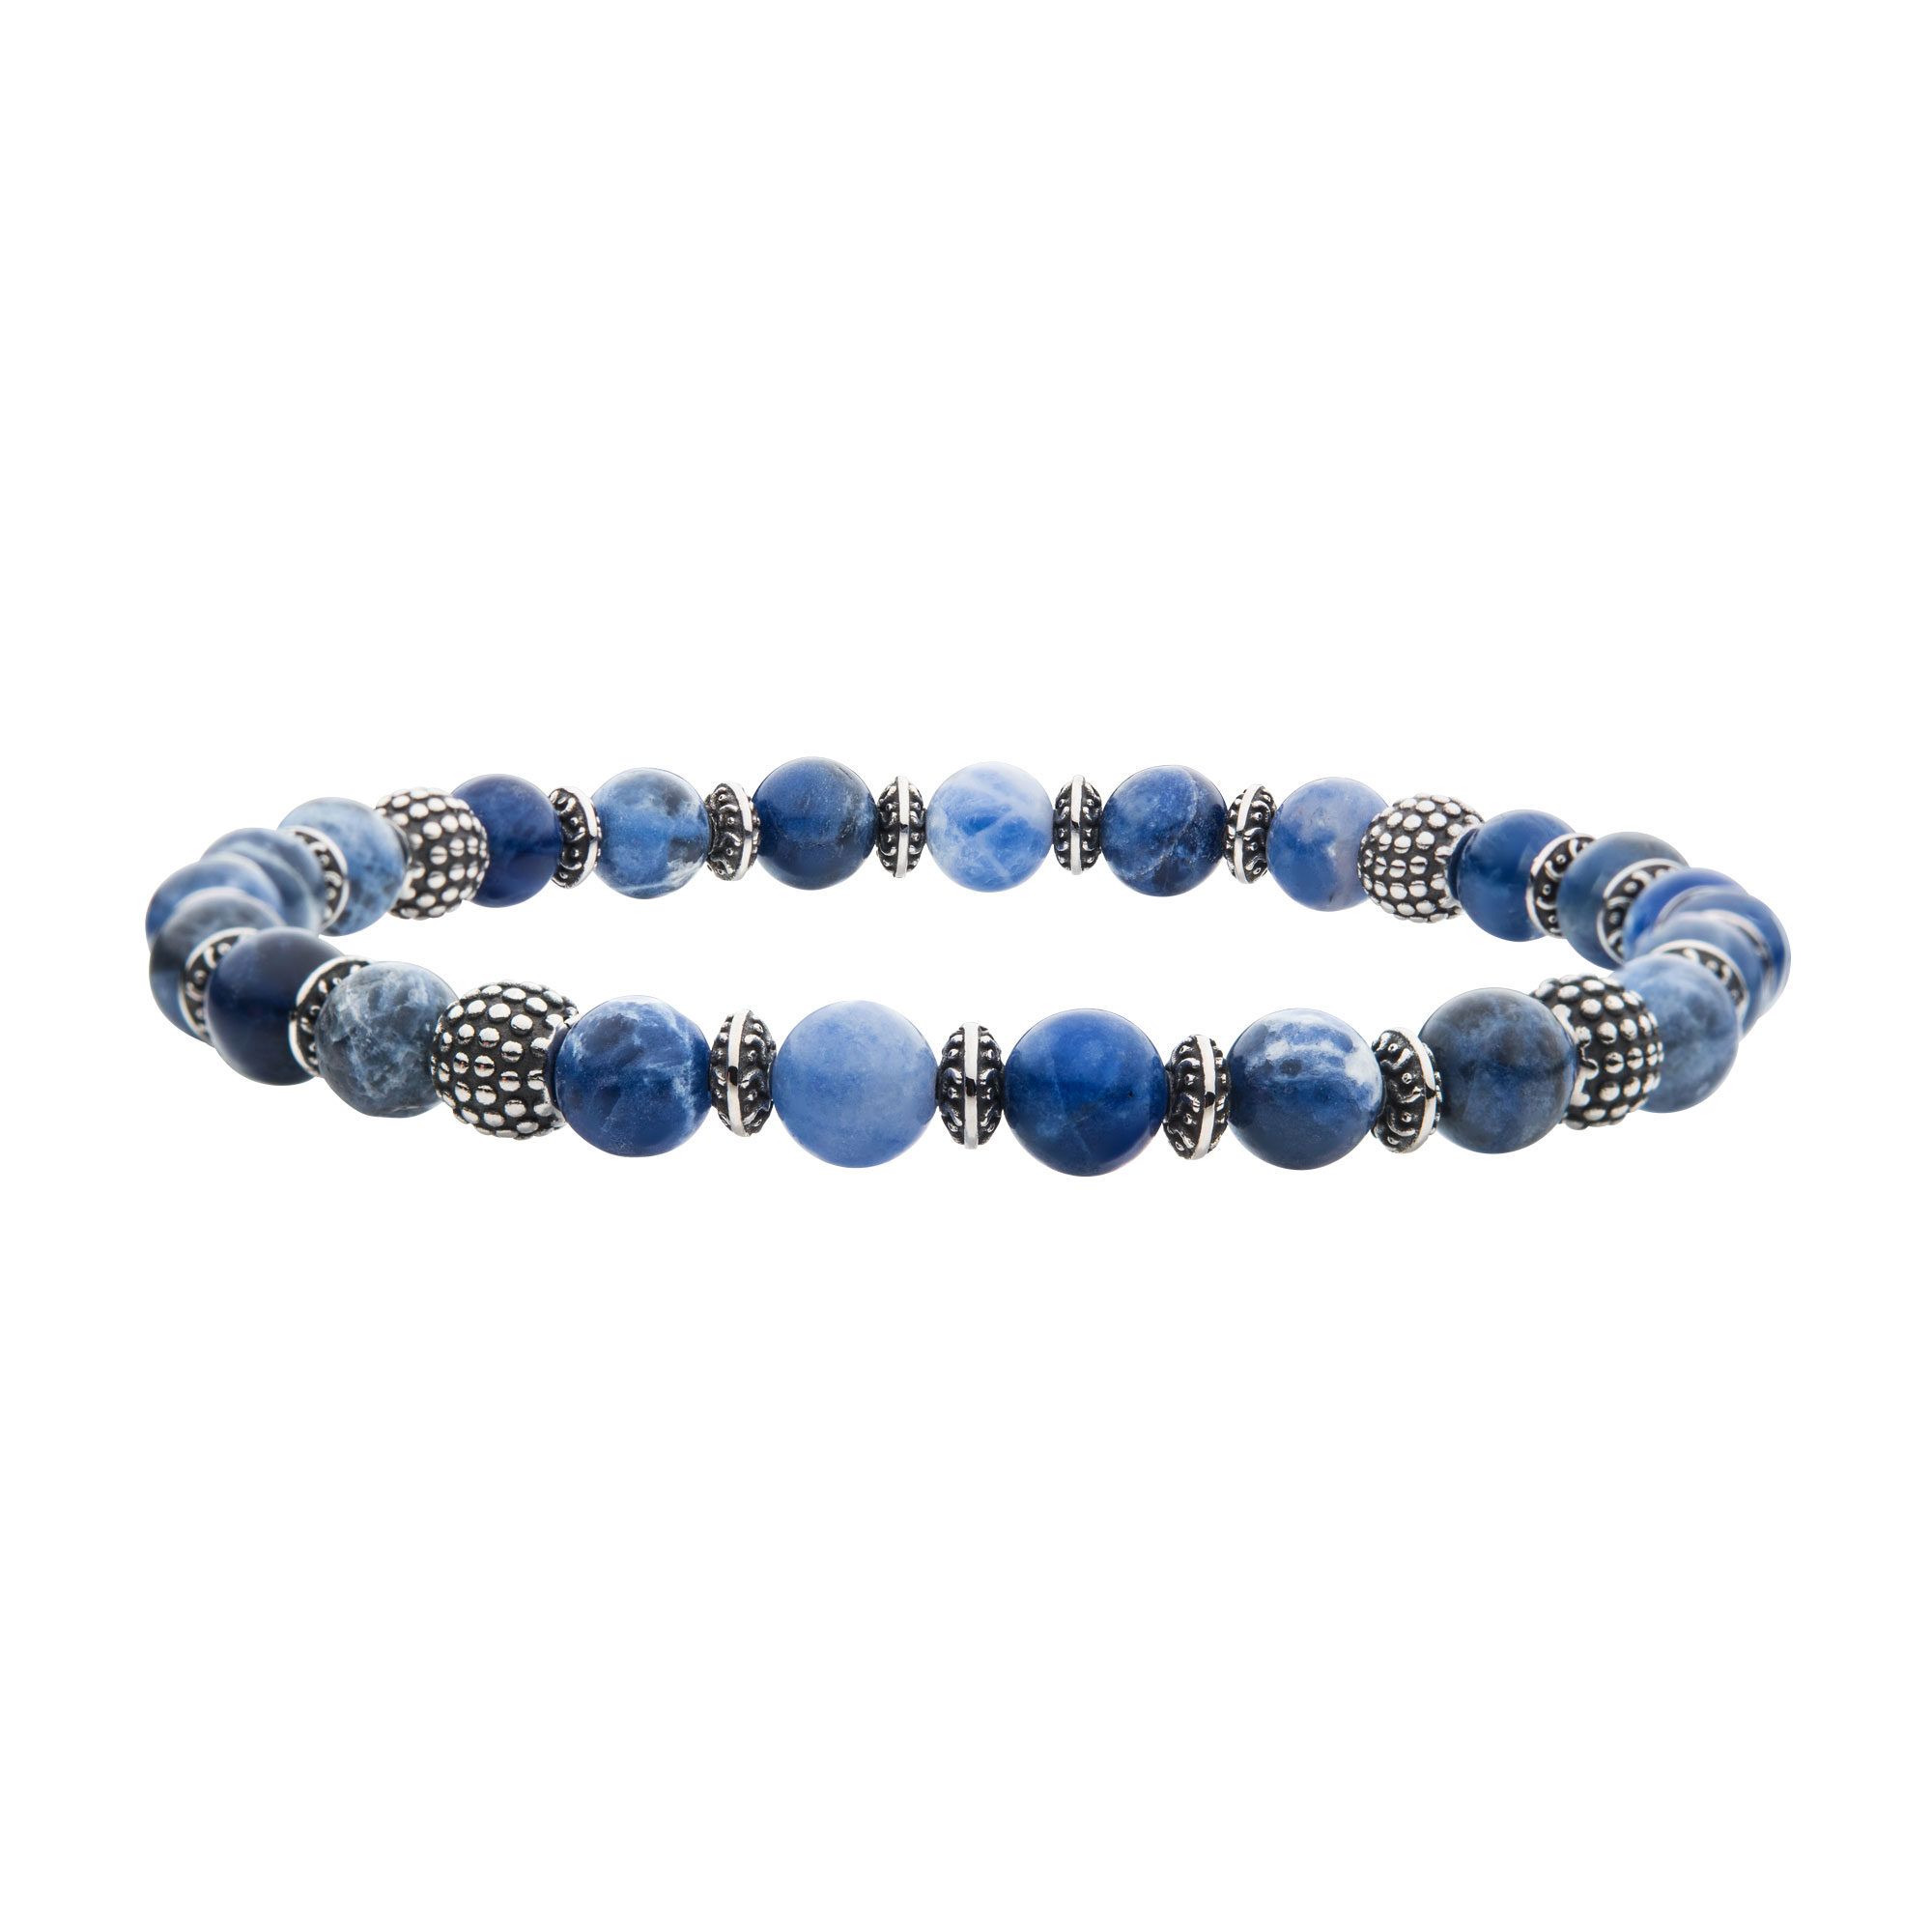 Blue Sodalite Stones with Black Oxidized Beads Bracelet Midtown Diamonds Reno, NV